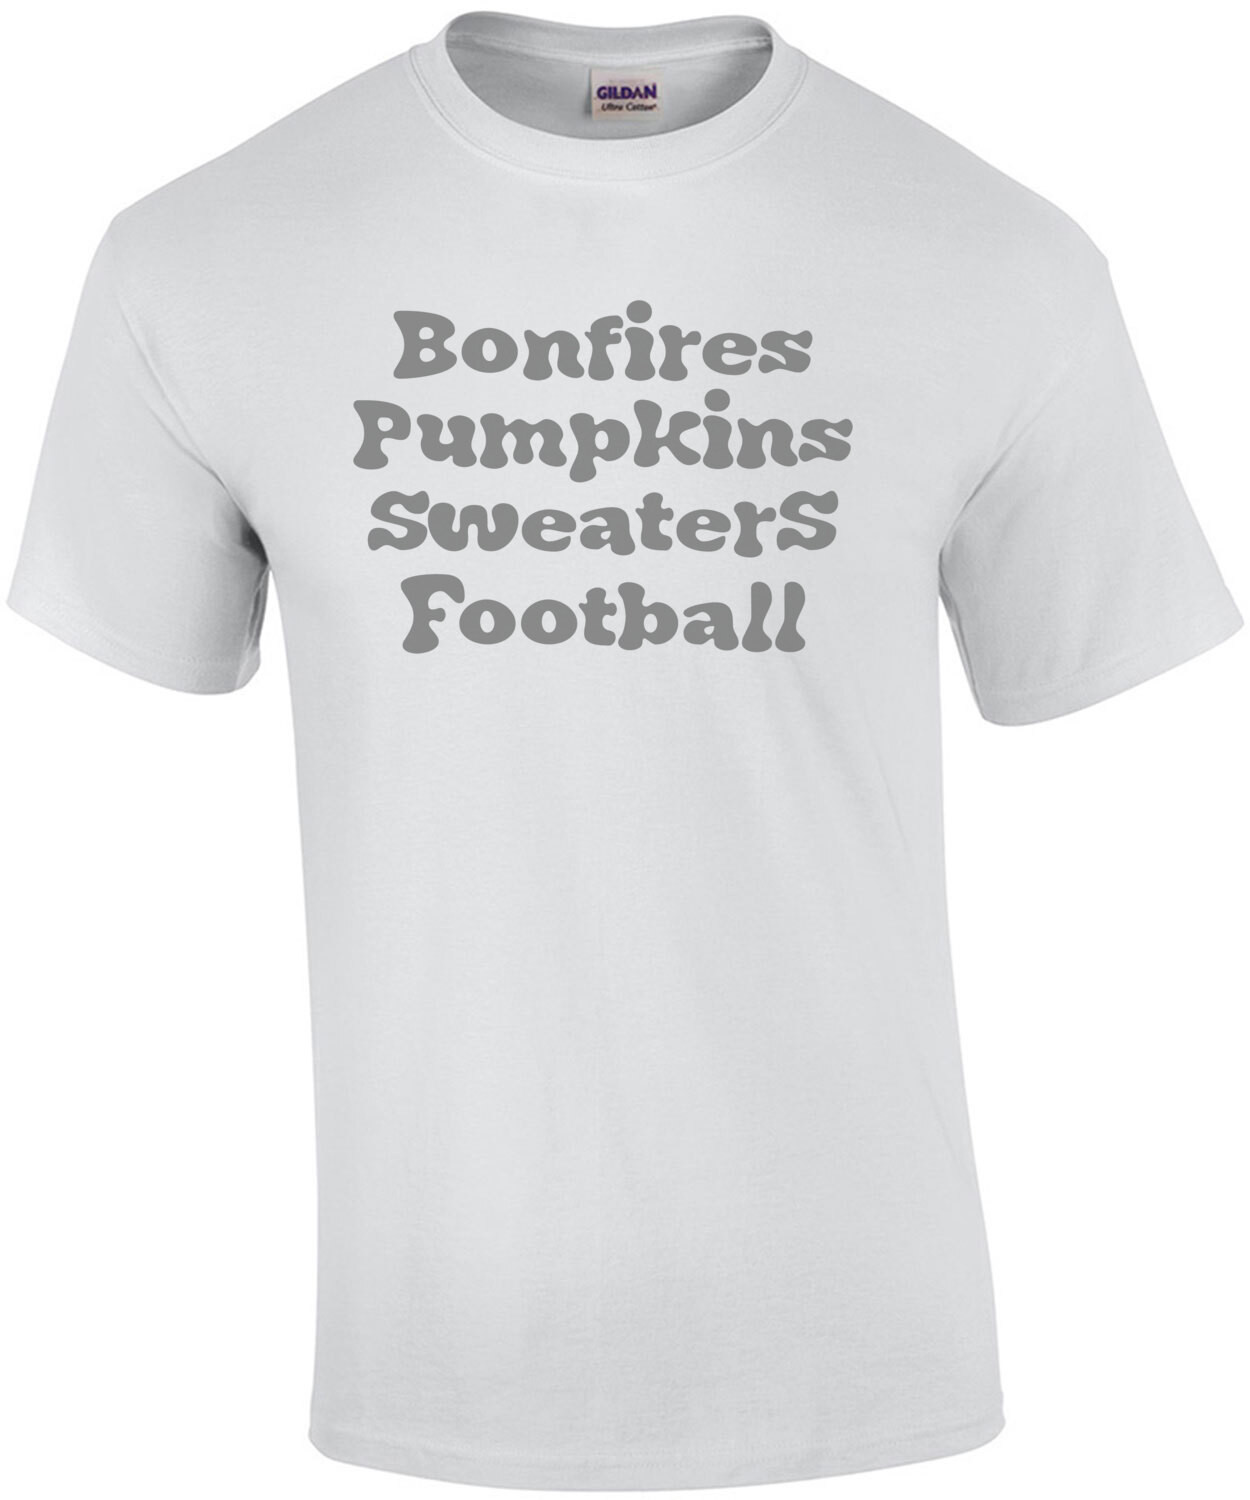 Bonfires Pumpkins Sweaters Football - Fall Autumn T-Shirt